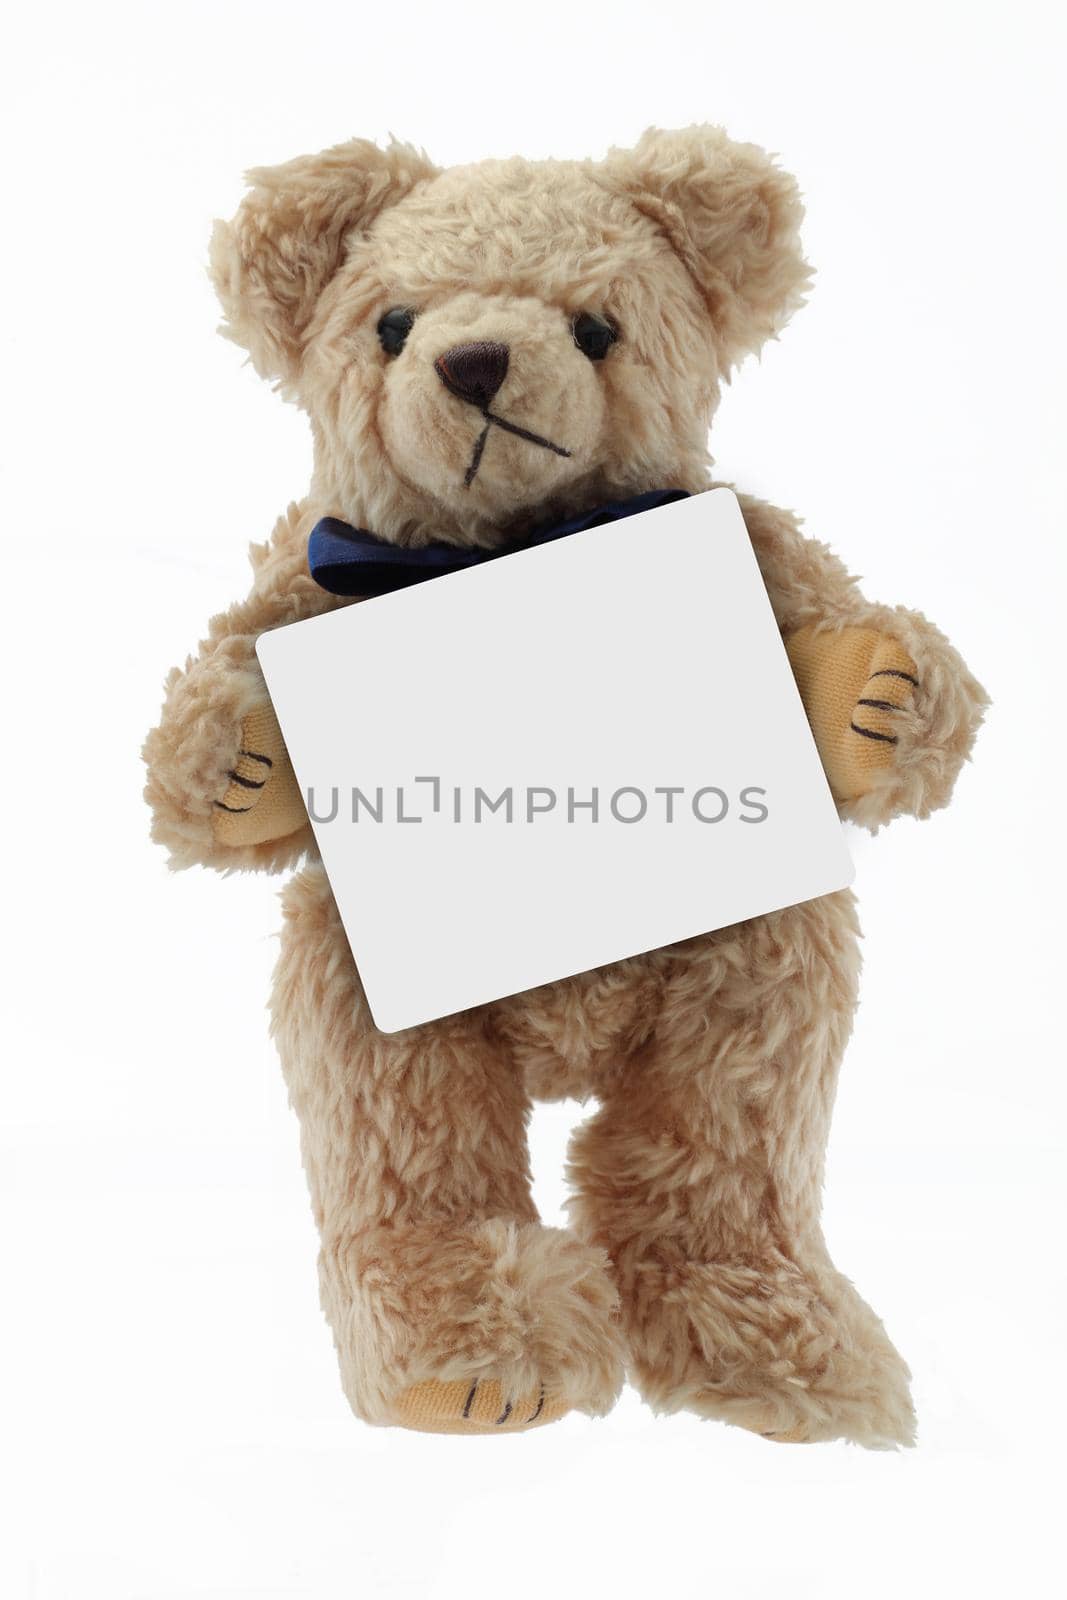 A cute teddy bear holding a blank message copy space